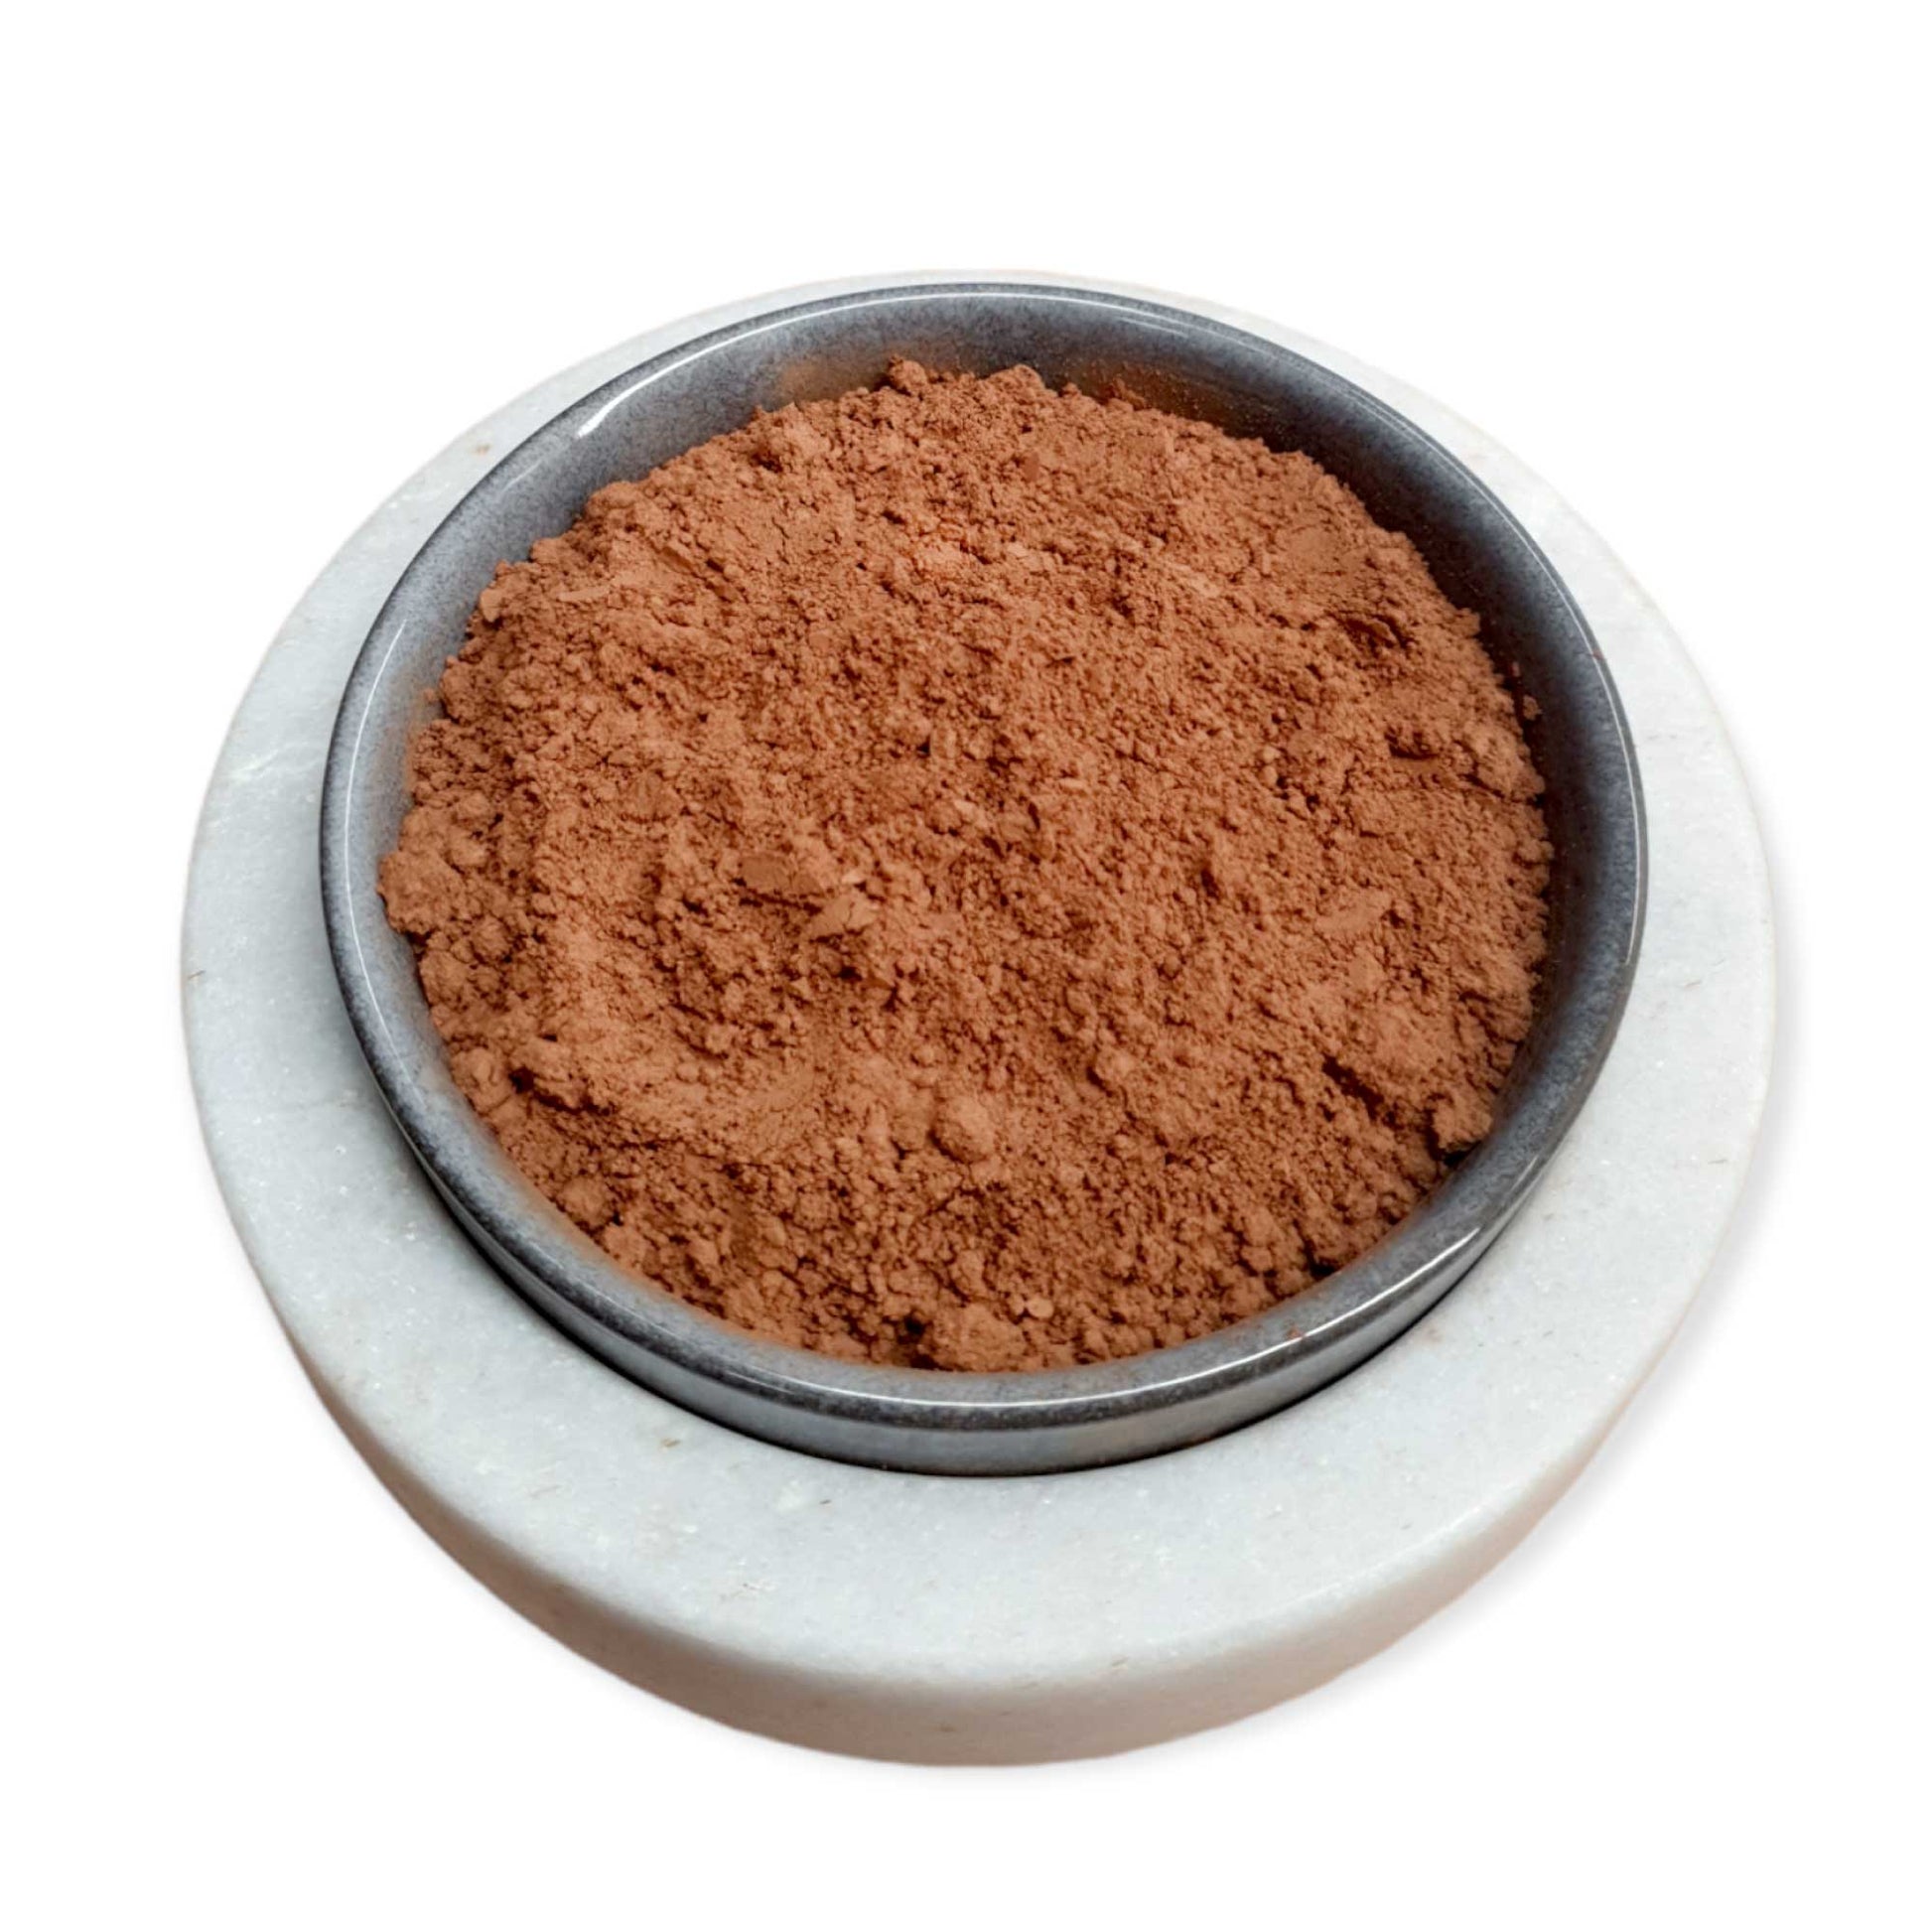 2Kg Organic Reishi Mushroom Powder Tub Bucket - Supplement Ganoderma Lingzhi-1